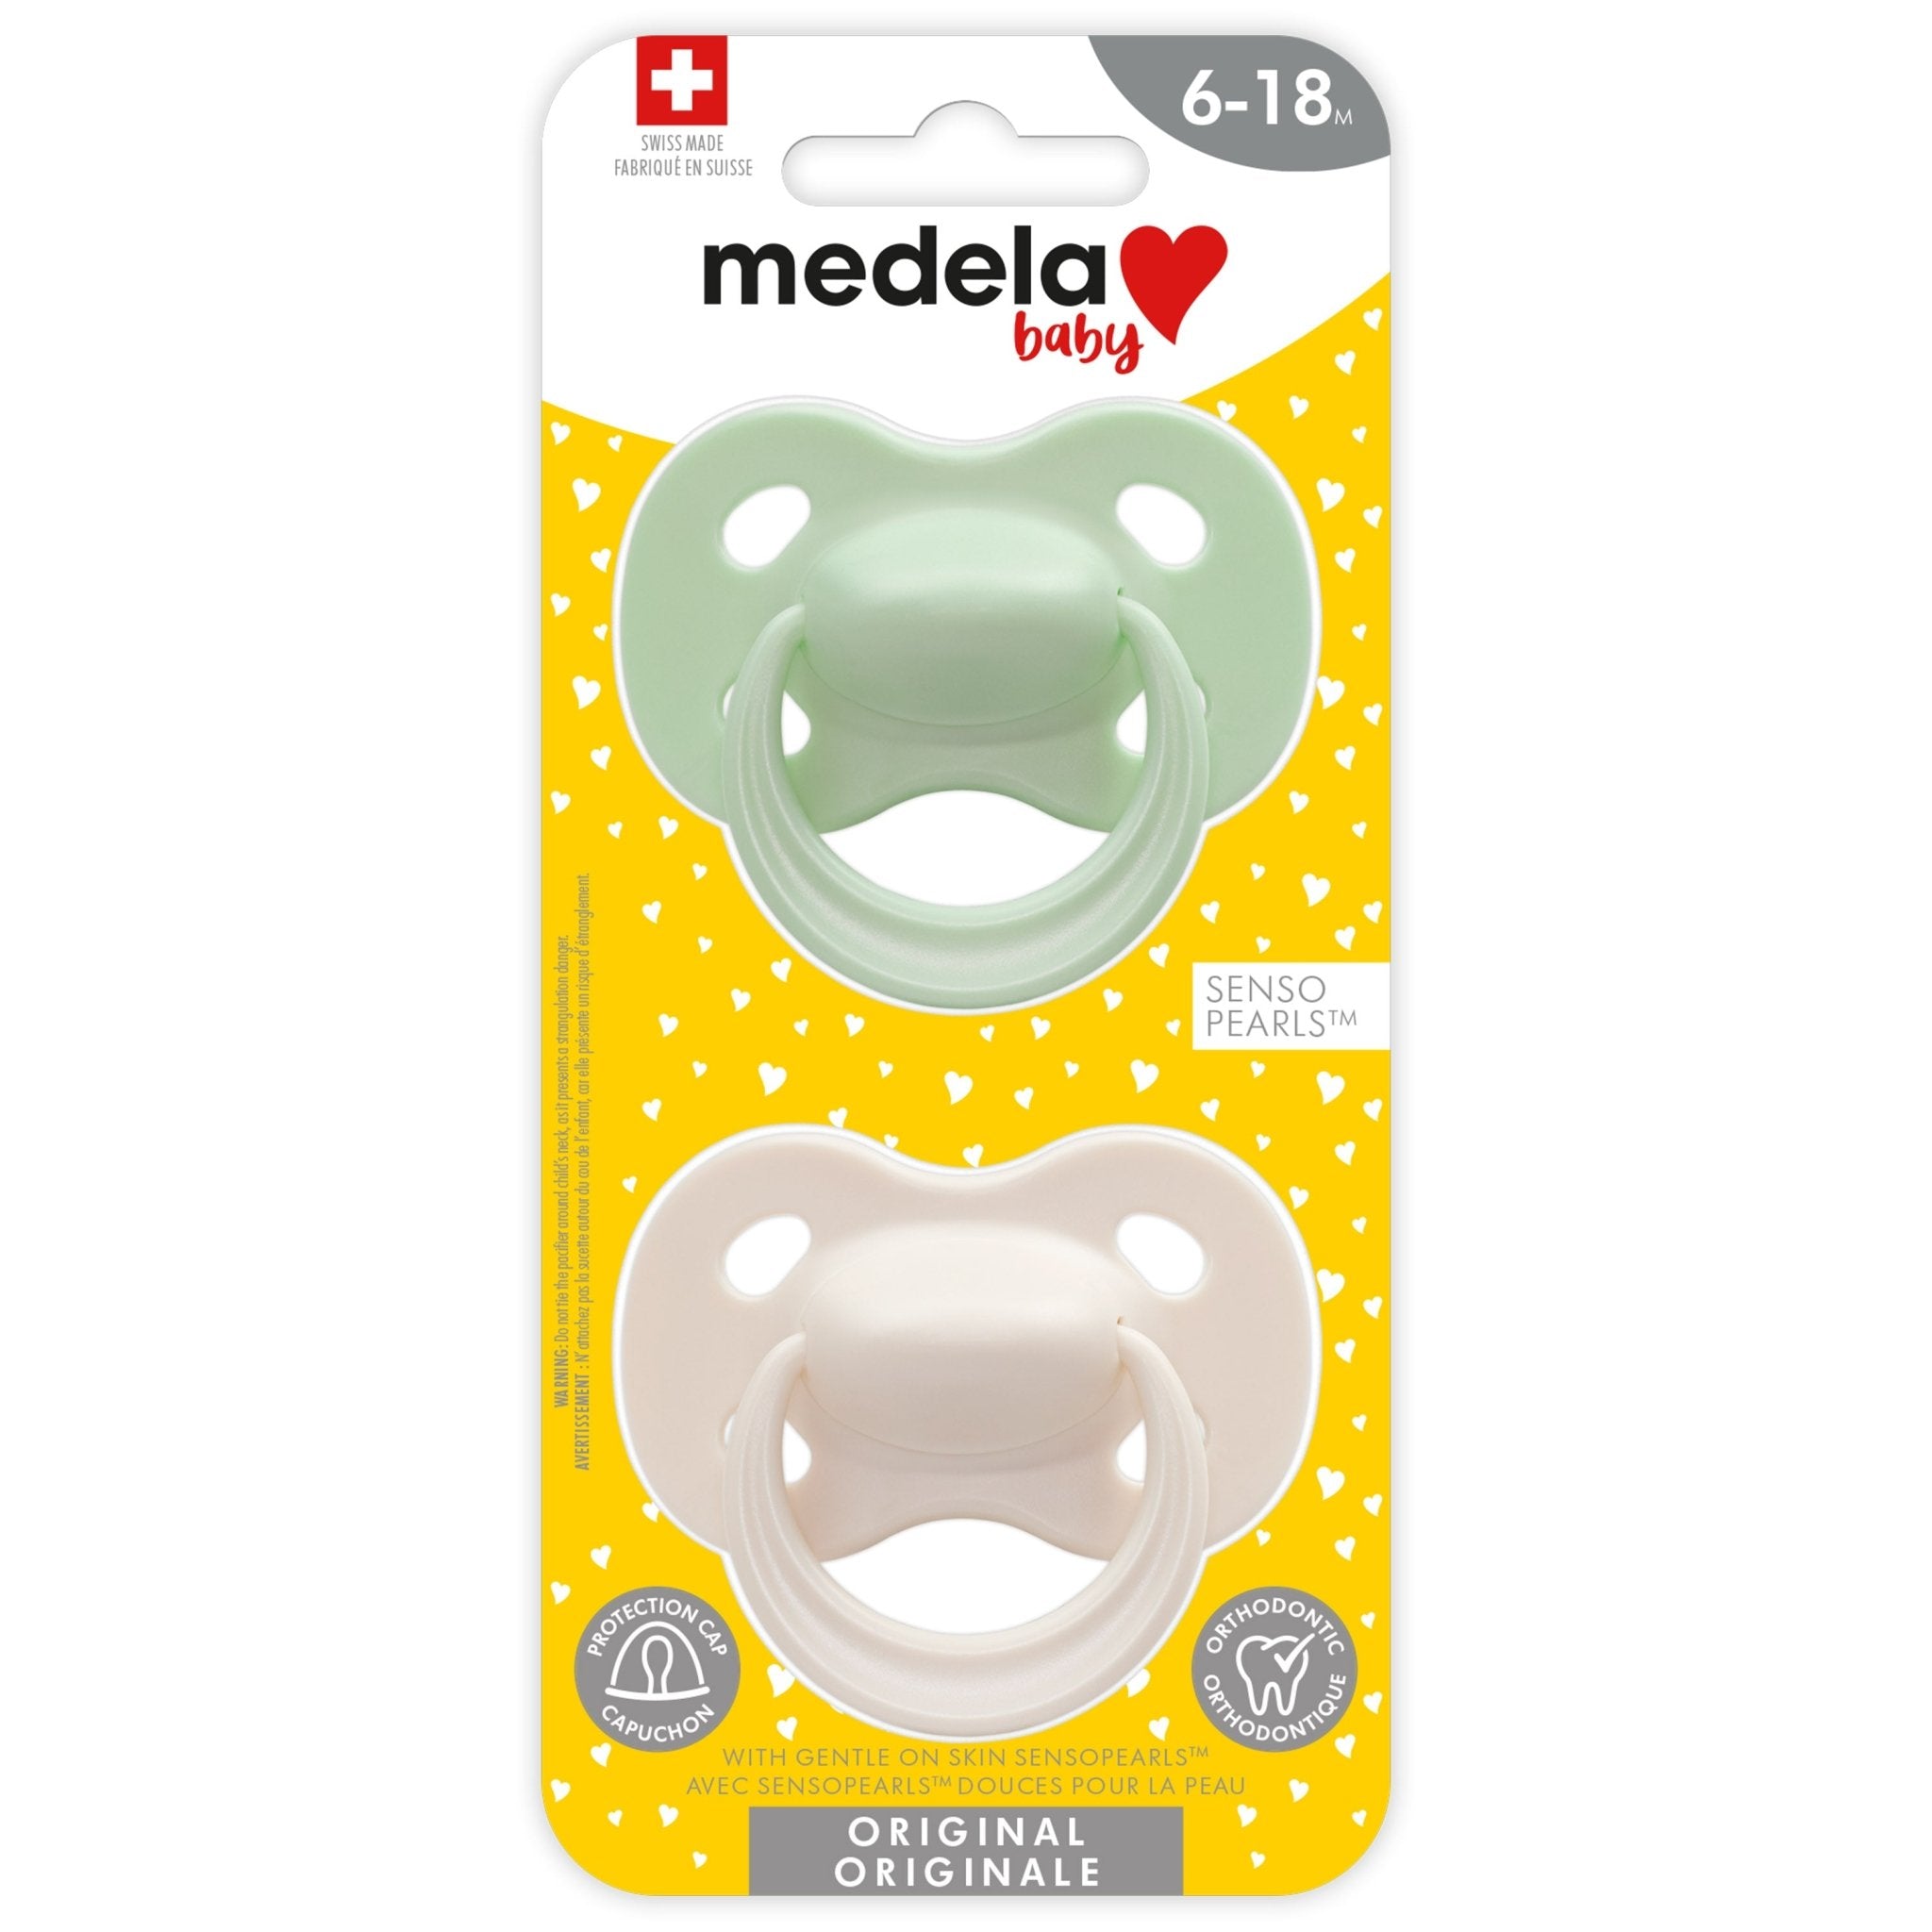 Medela Baby Original Pacifier, Jade/Calm, 2 Pack - ANB Baby -0-18 months pacifiers